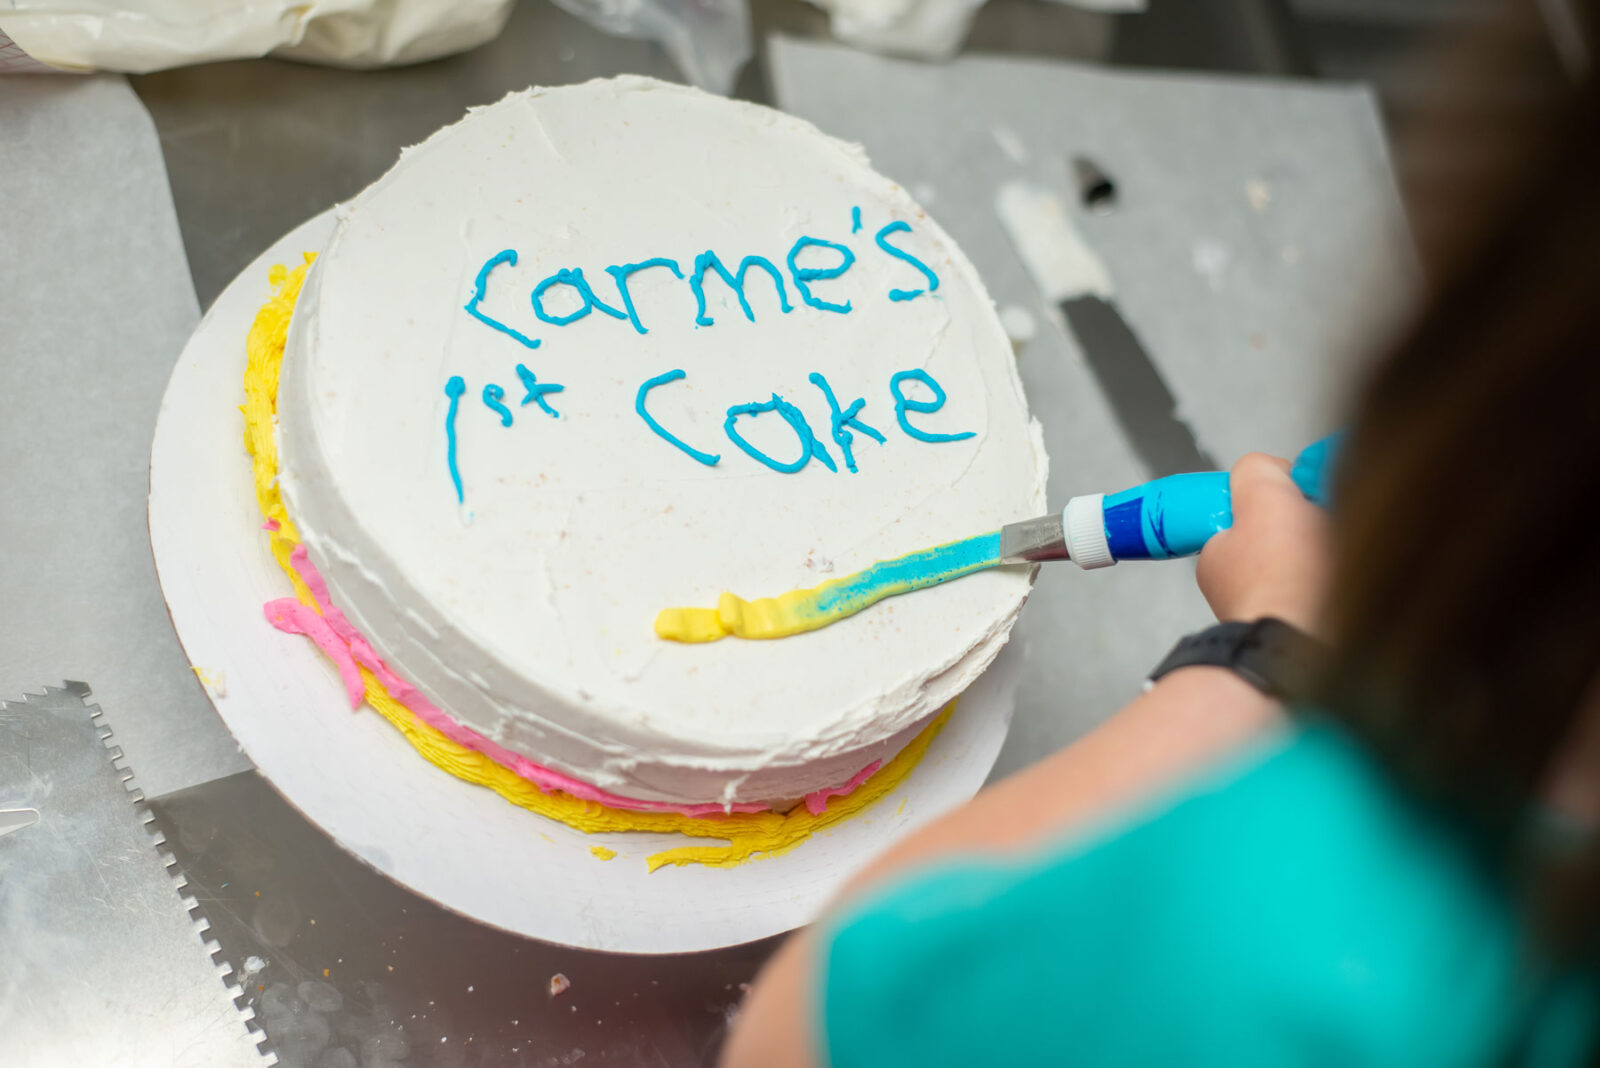 Carmens First Cake Blank